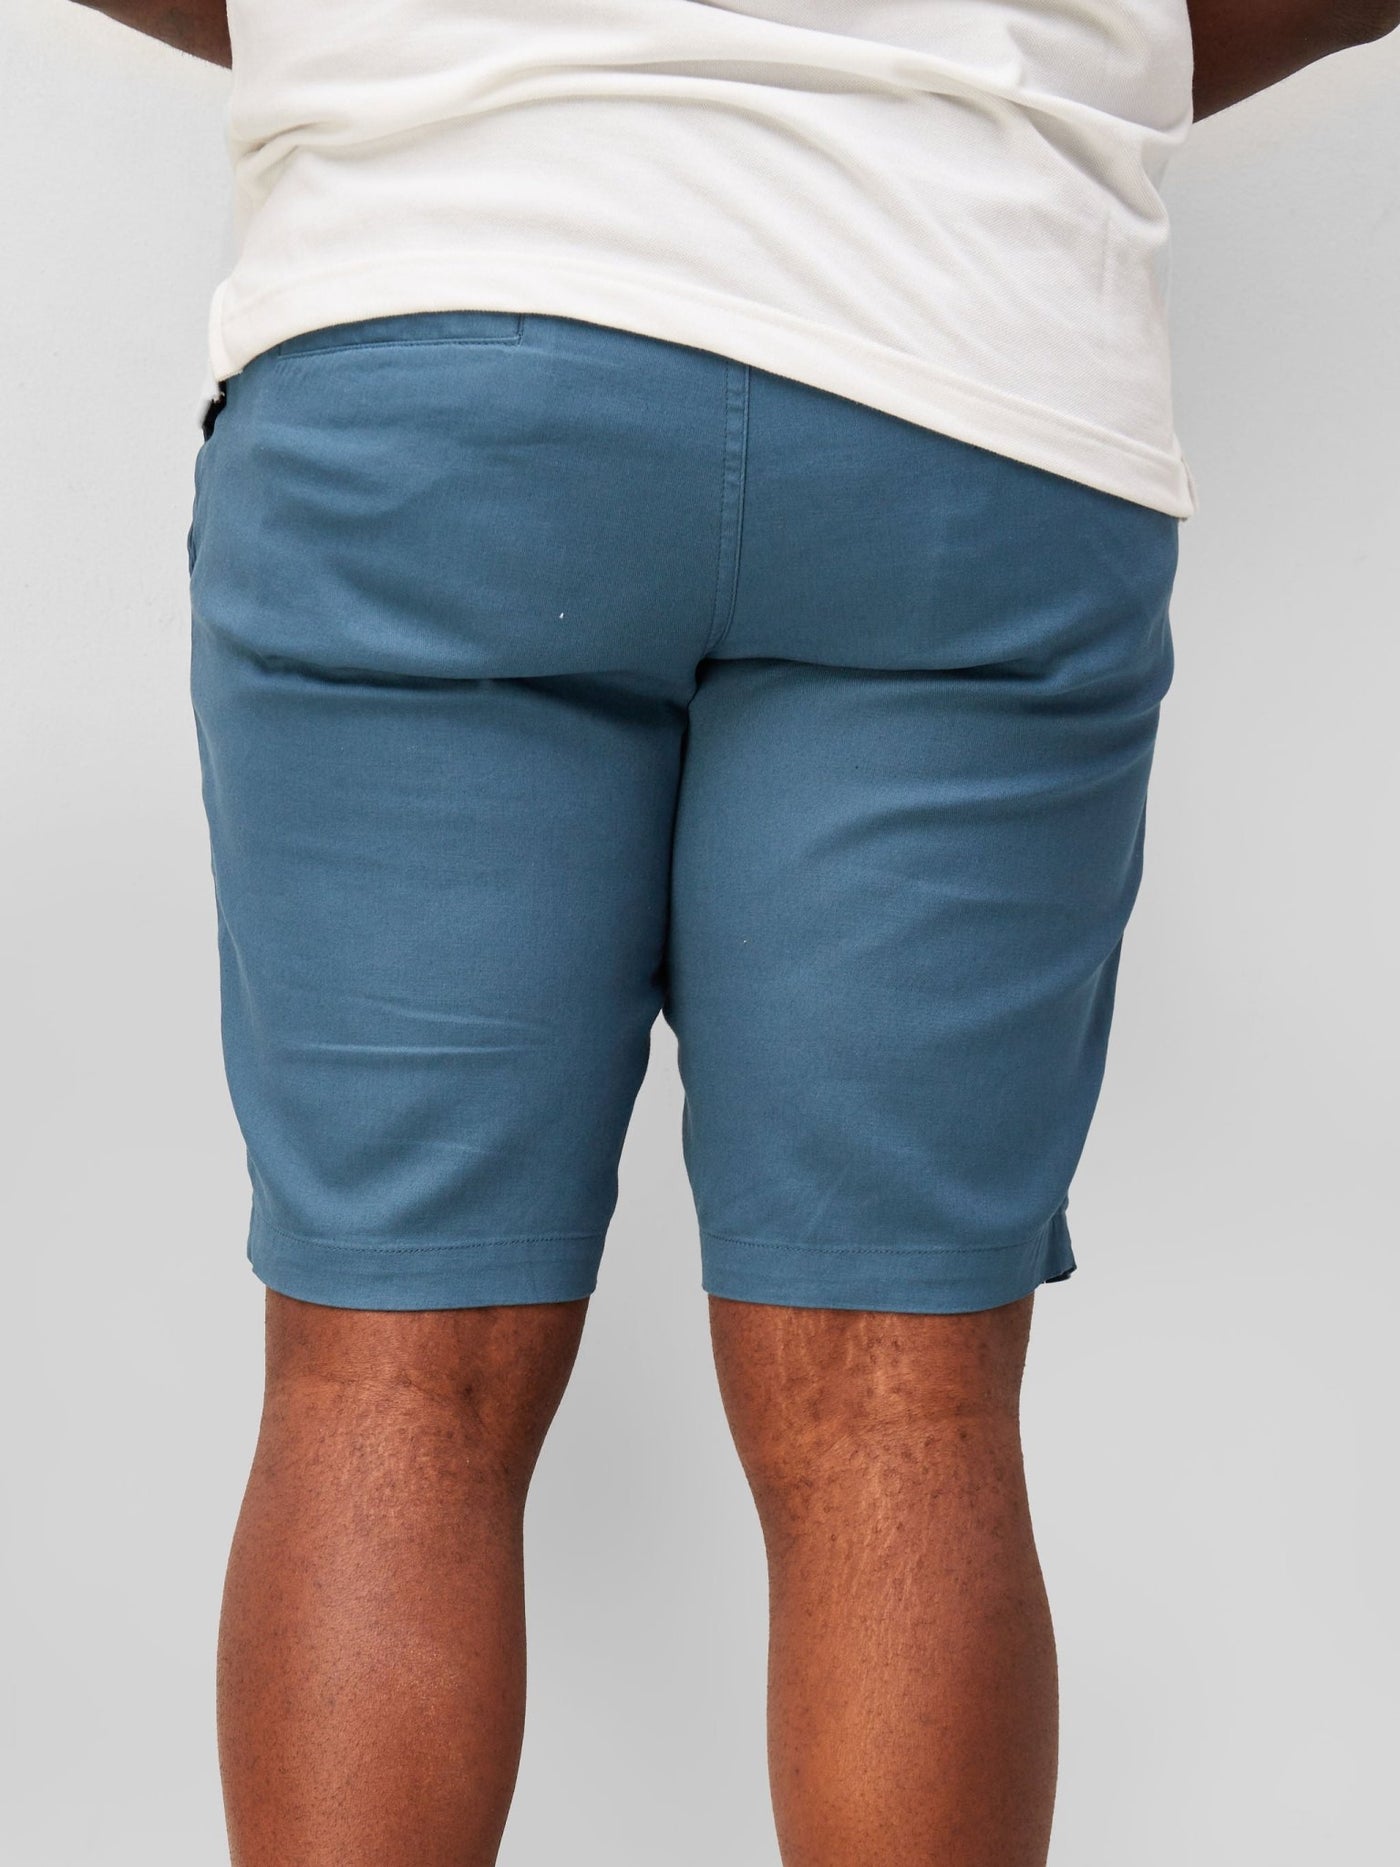 Zetu Men's Chino Shorts - Teal Blue - Shopzetu